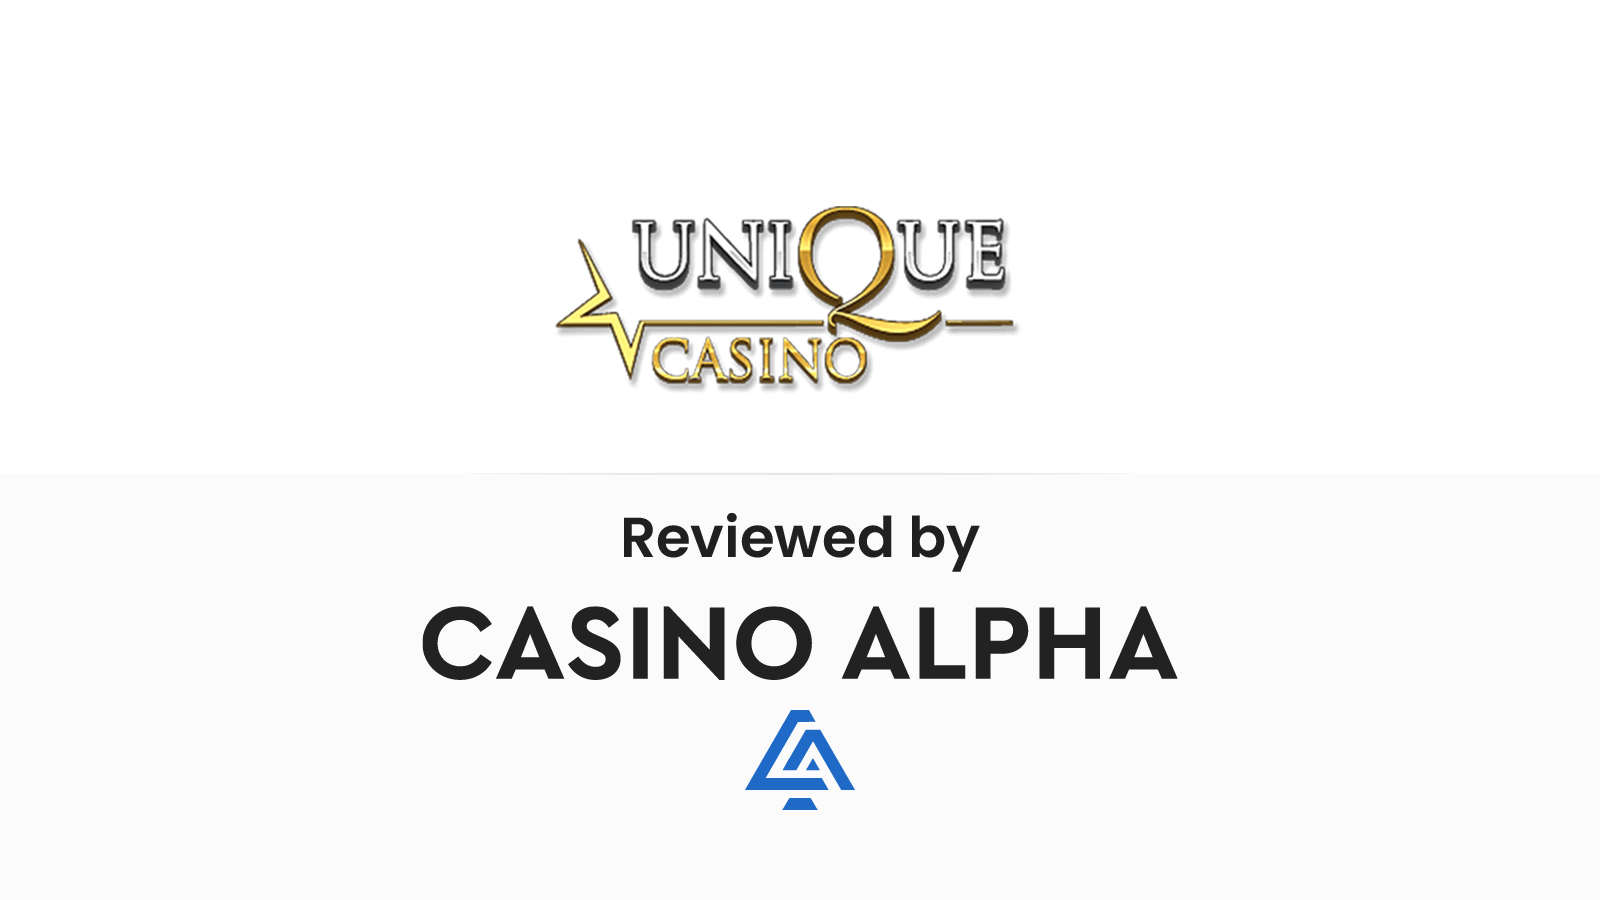 Unique Casino Review & Offers